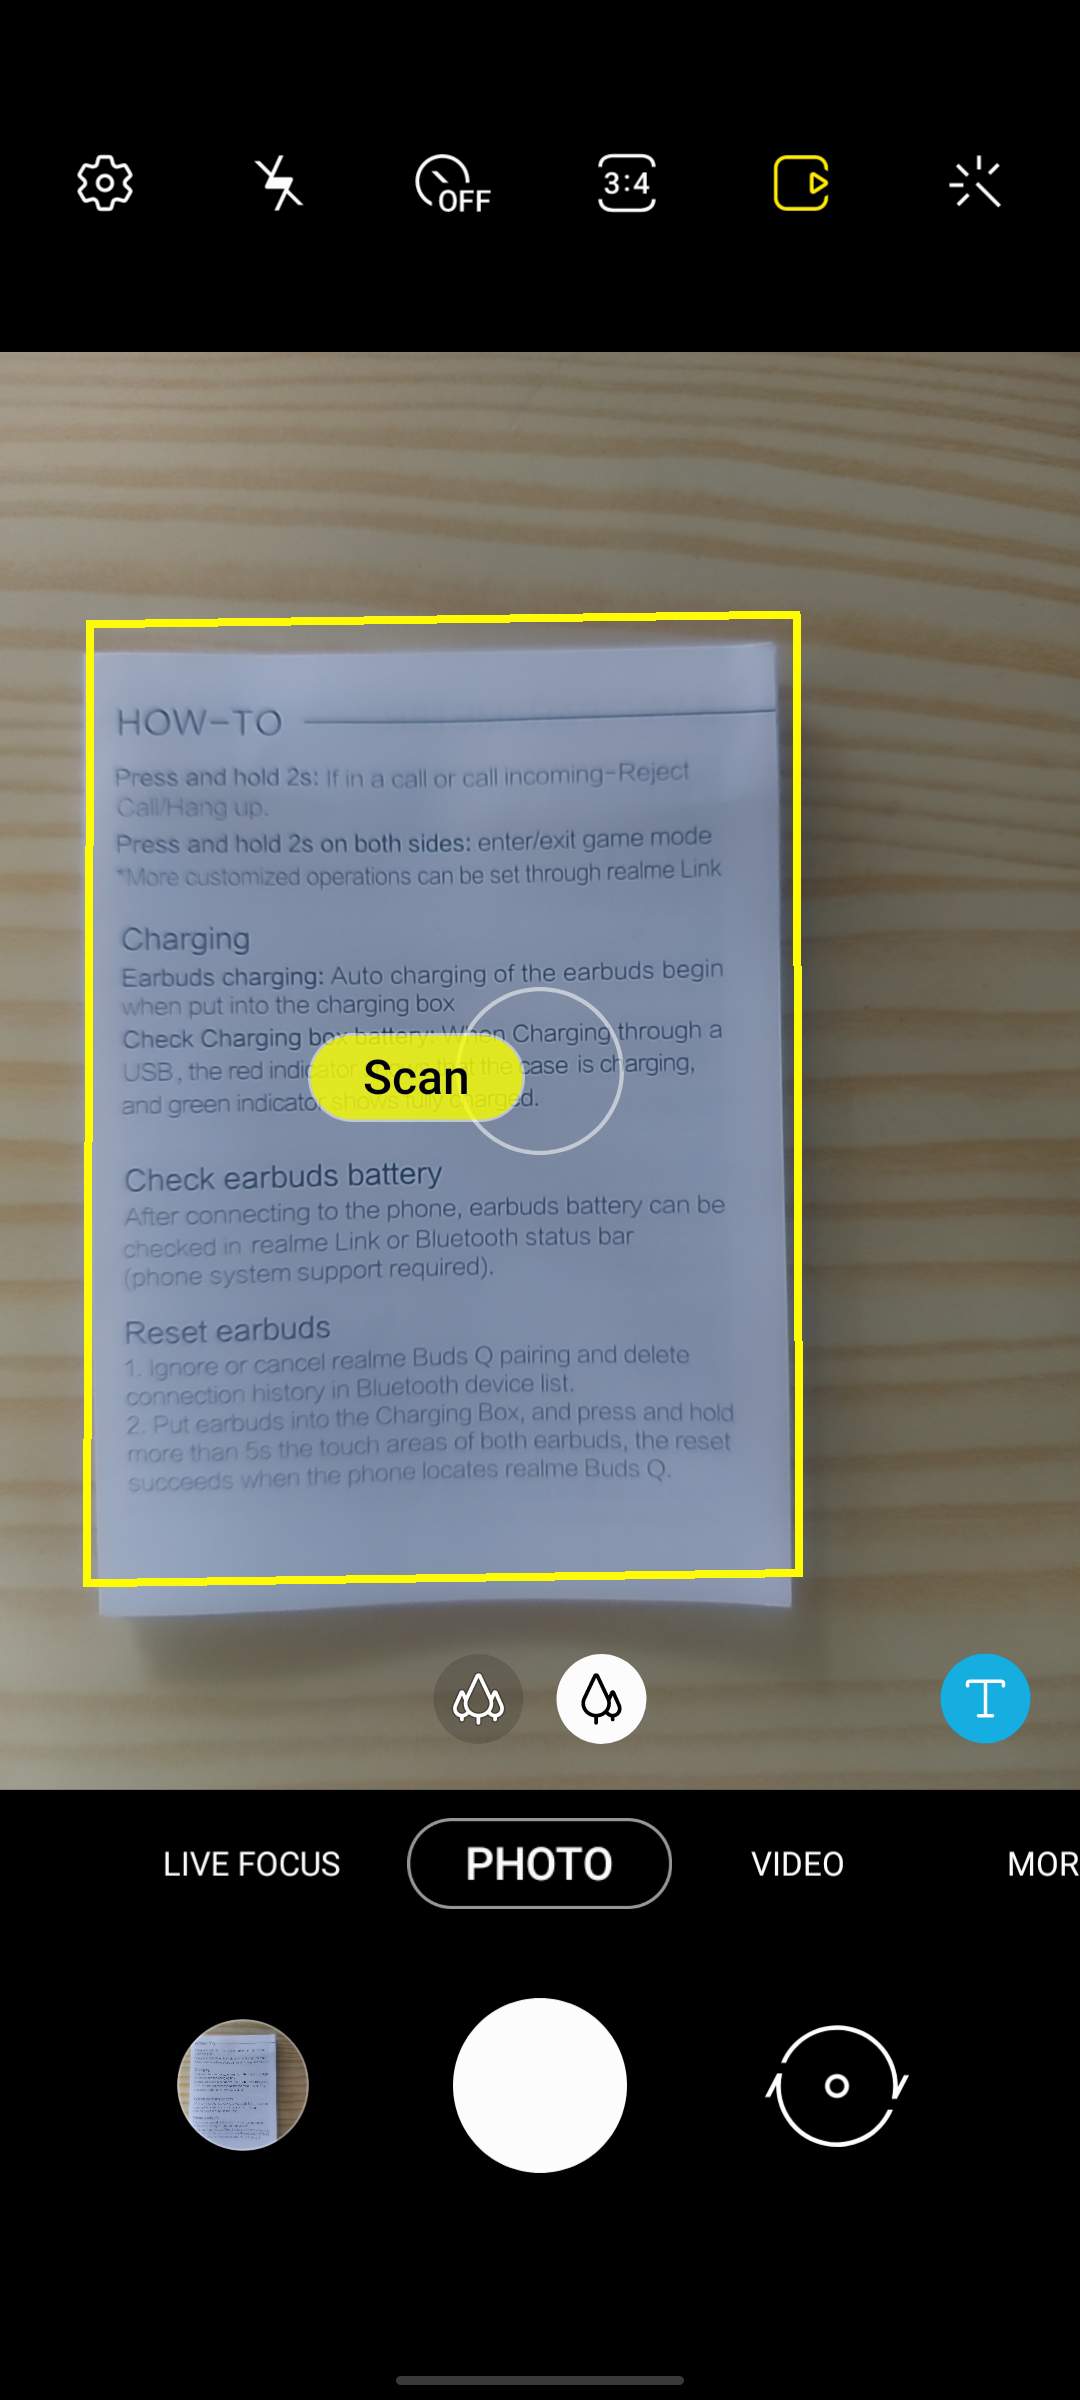 Scanning using default camera app